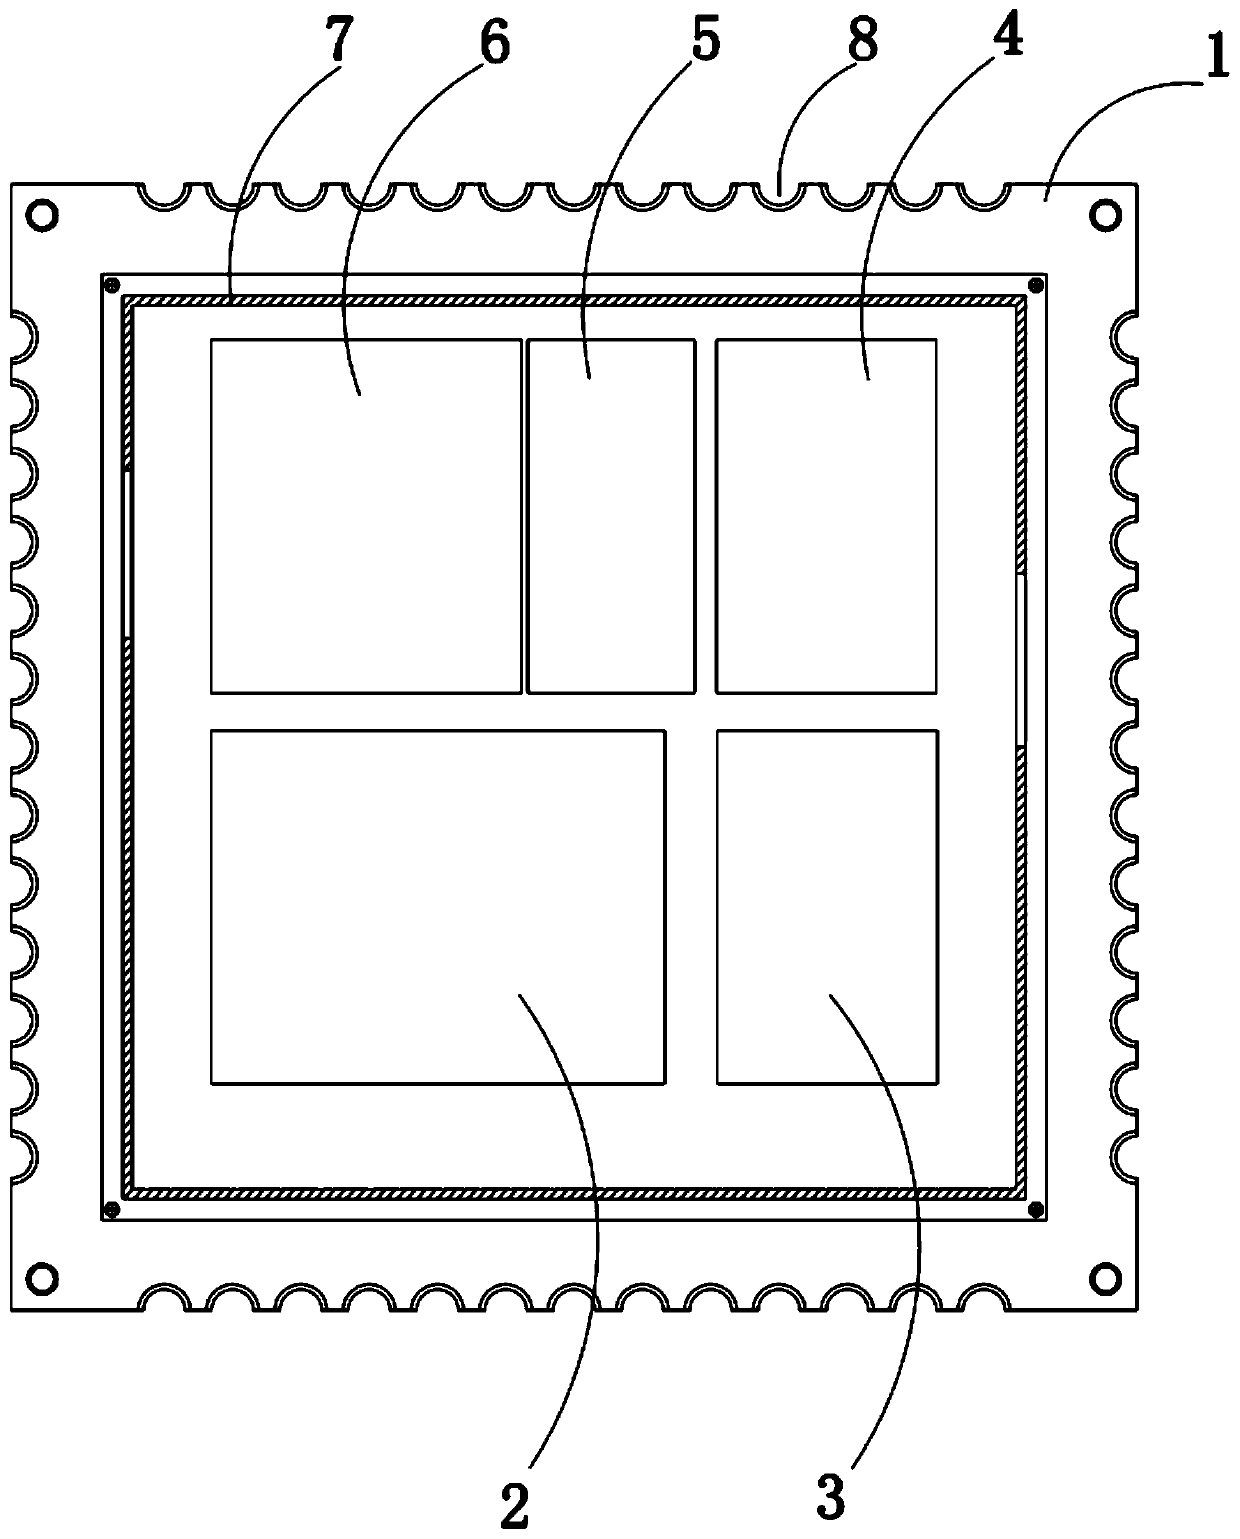 Stamp hole bonding pad surface mounting type image visual processing module